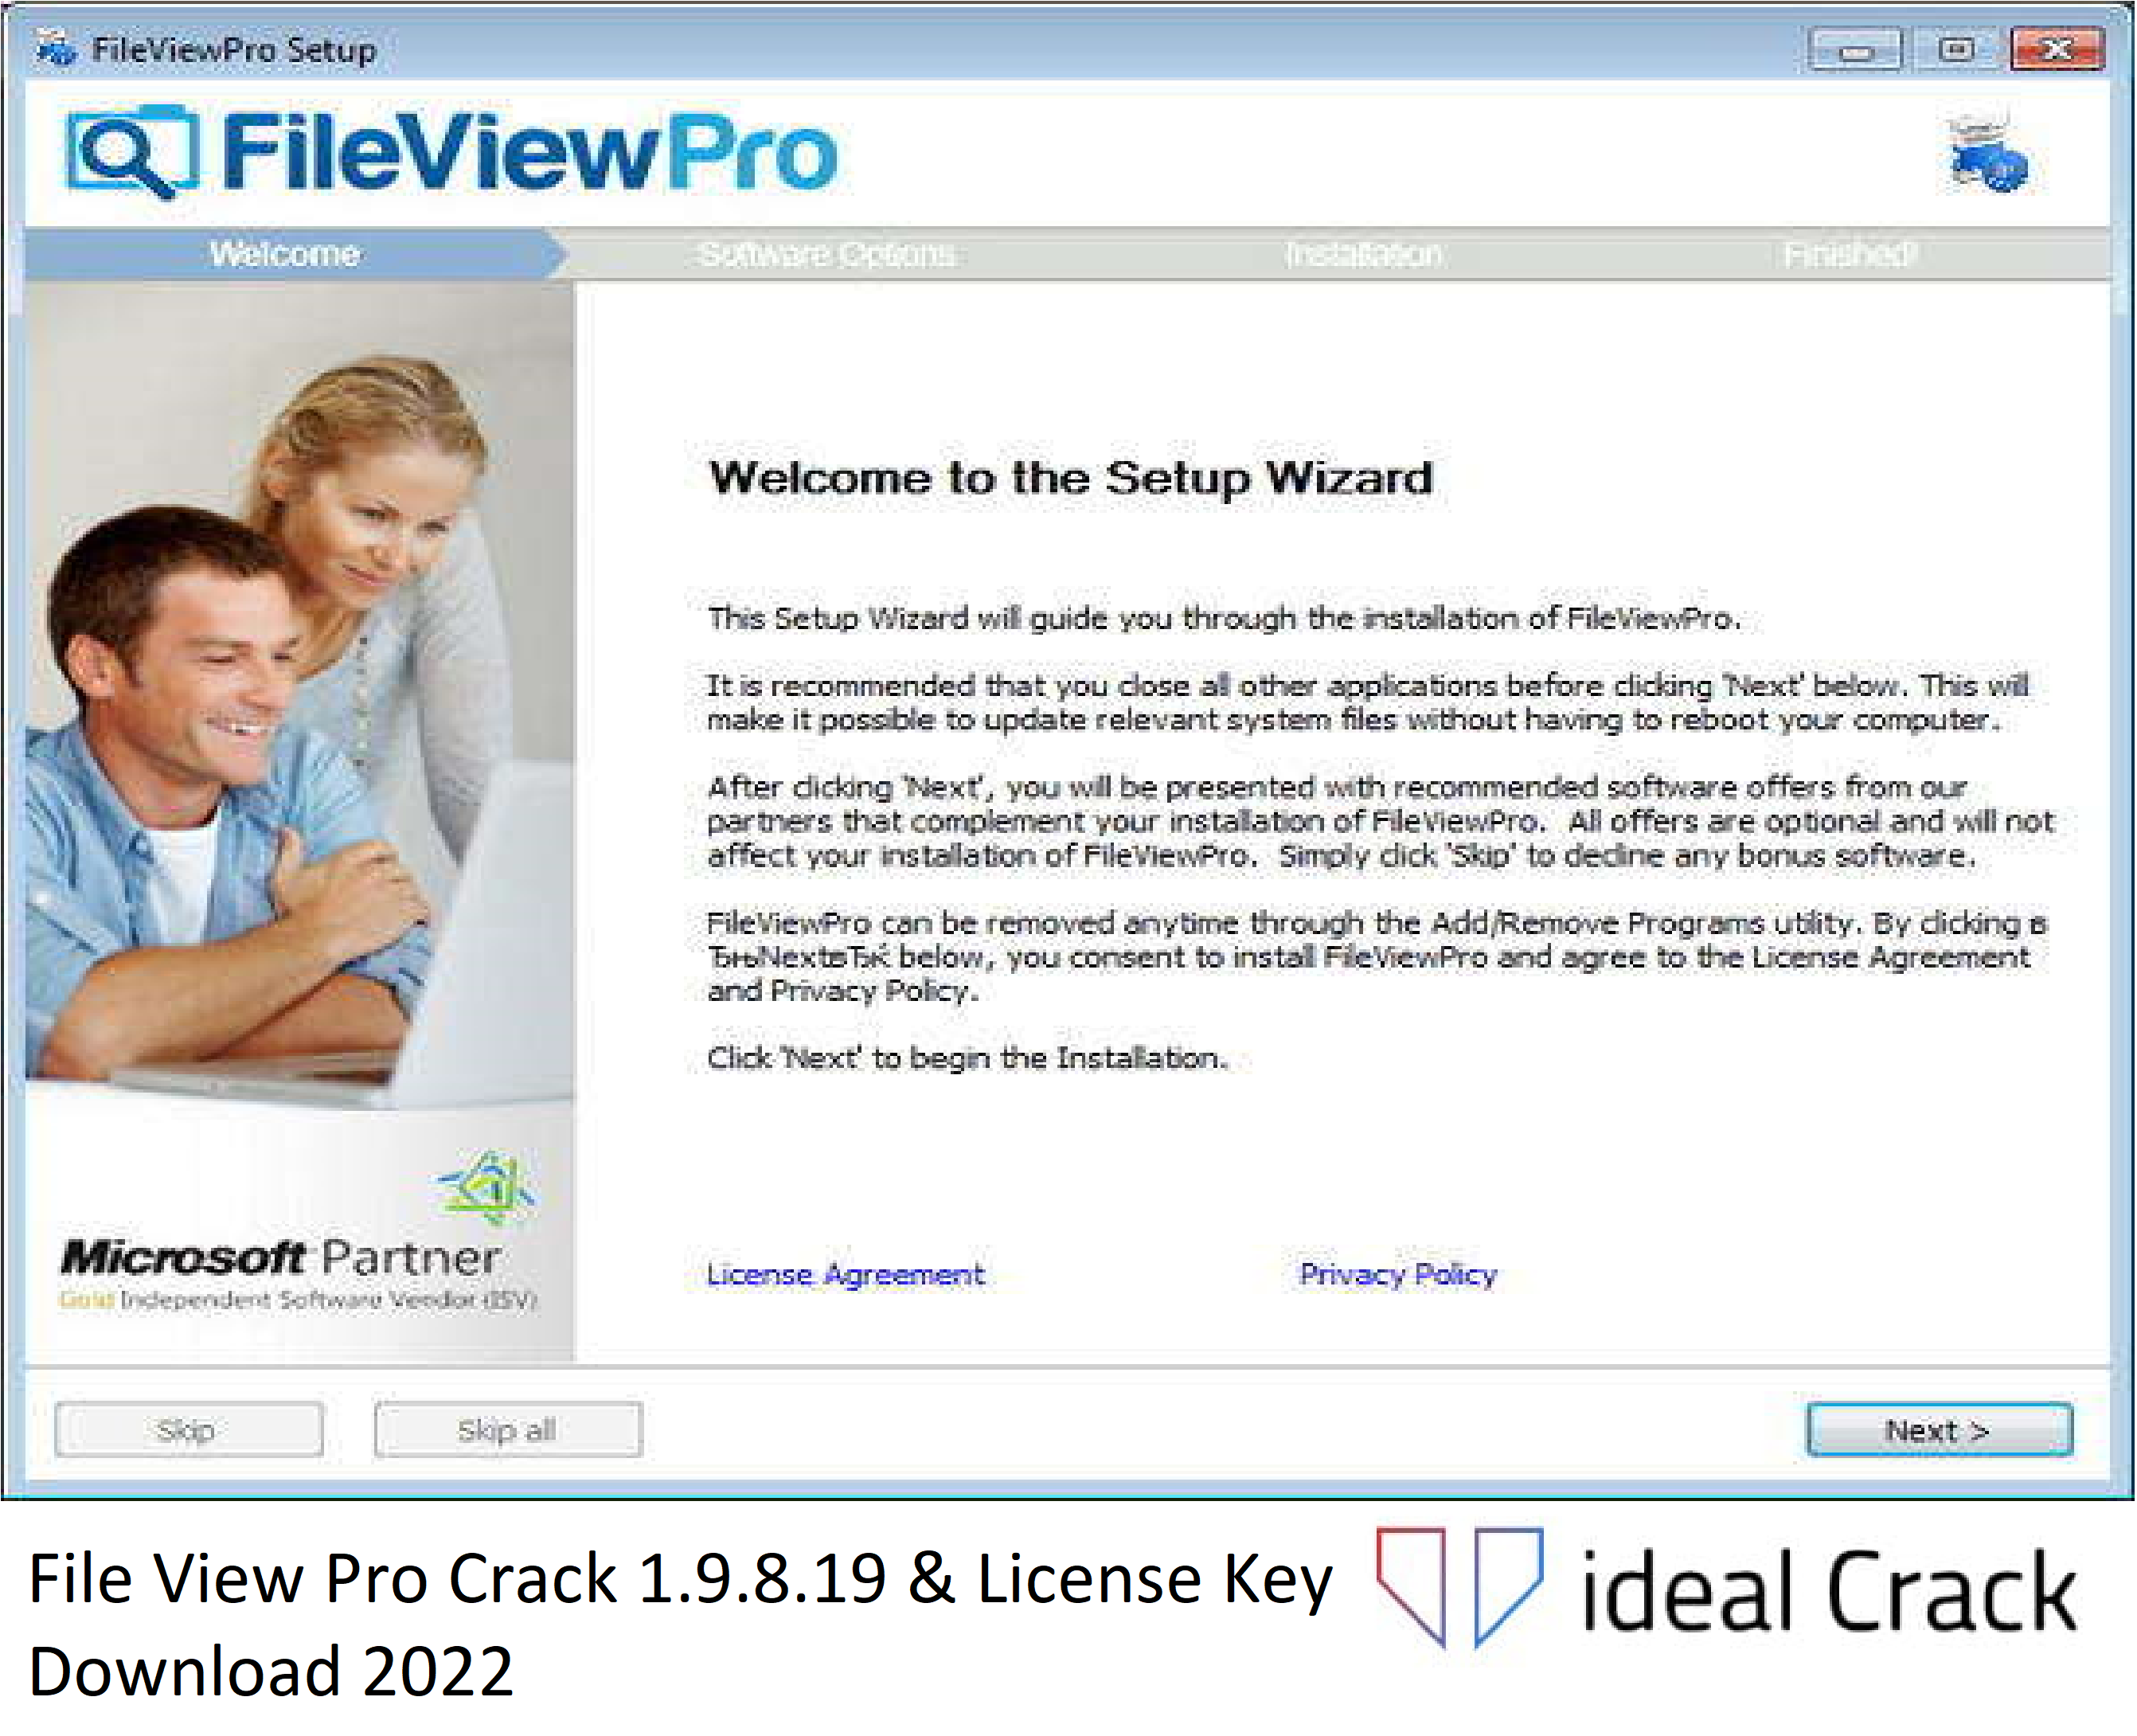 File View Pro Crack 1.9.8.19 & License Key Download 2022